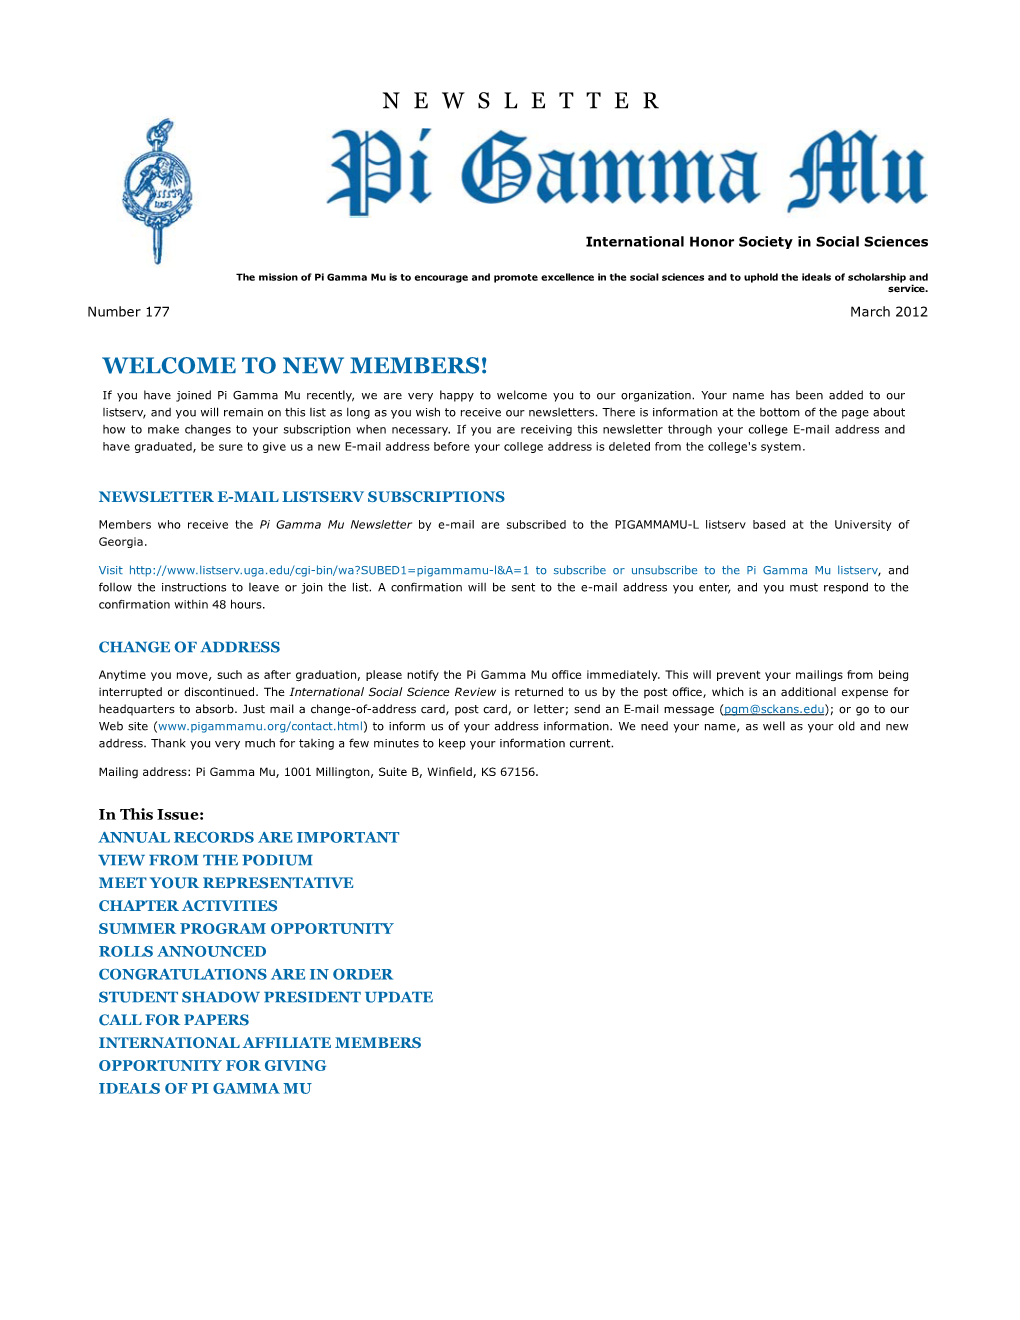 Pi Gamma Mu International Newsletter: March 2012